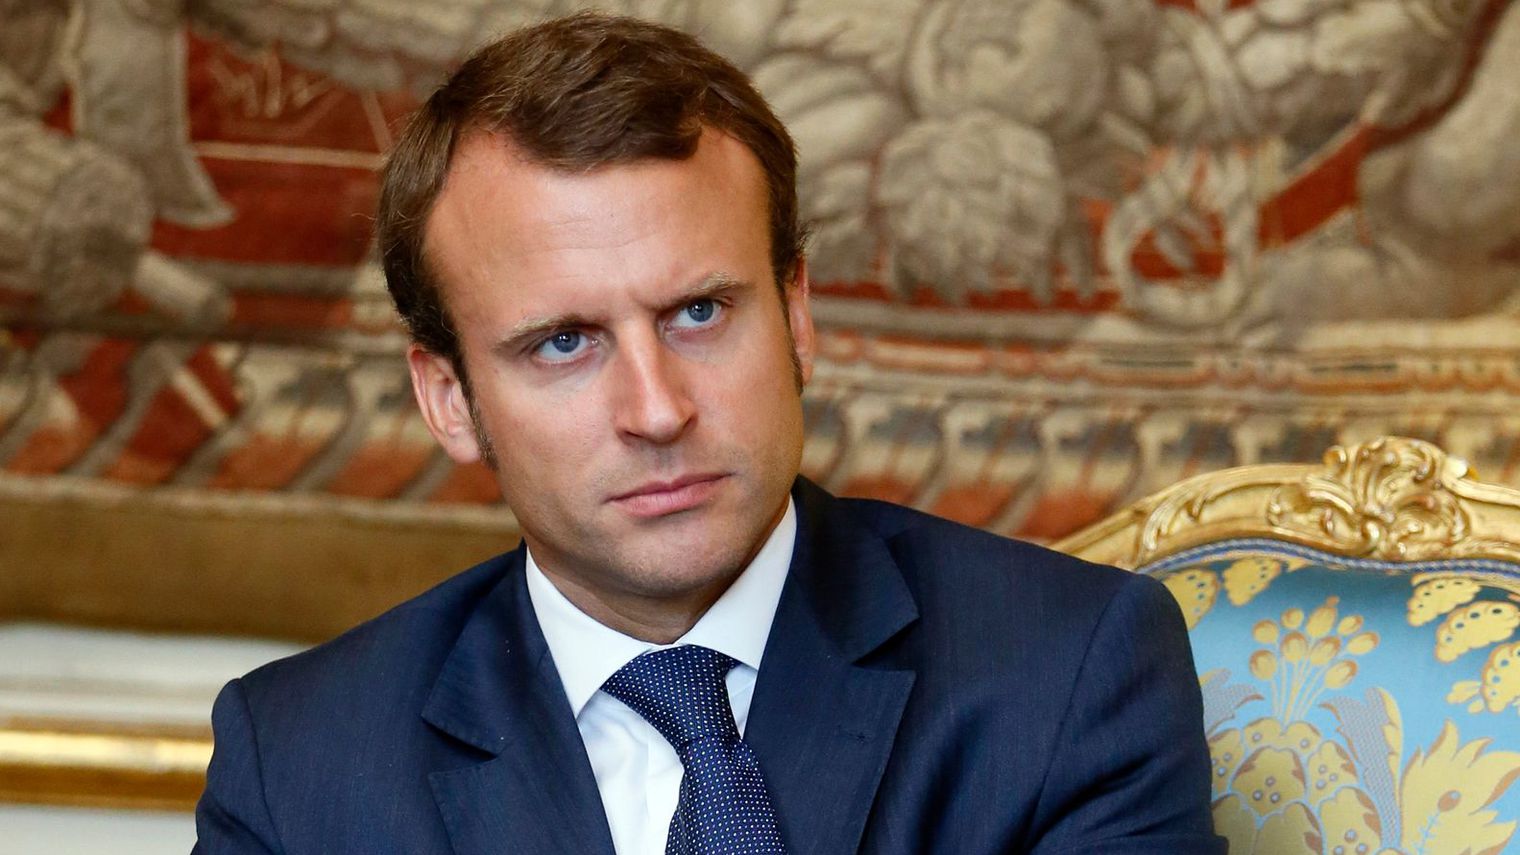 Tổng thống Pháp Emmanuel Macron